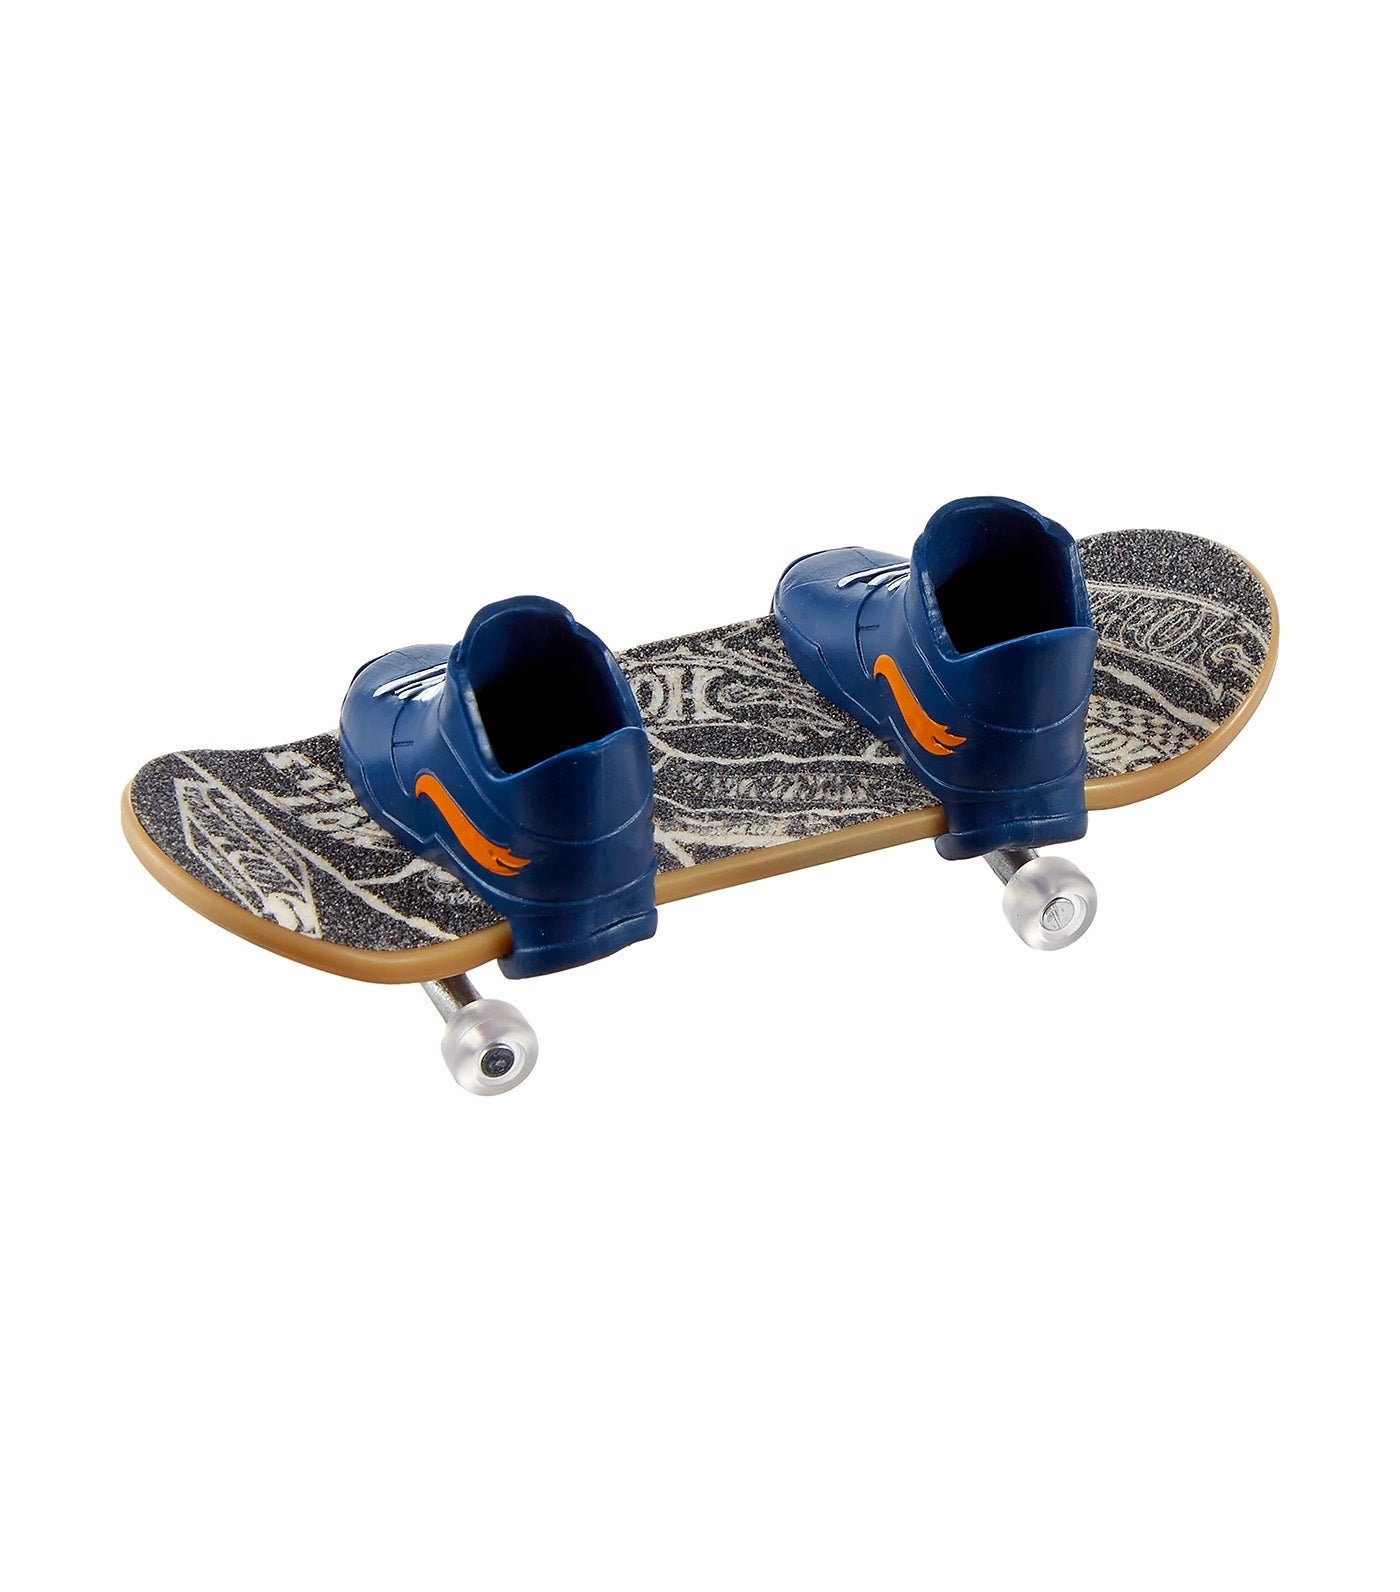 Skate - Fingerboard Board and Basketball Shoe (HGT47)